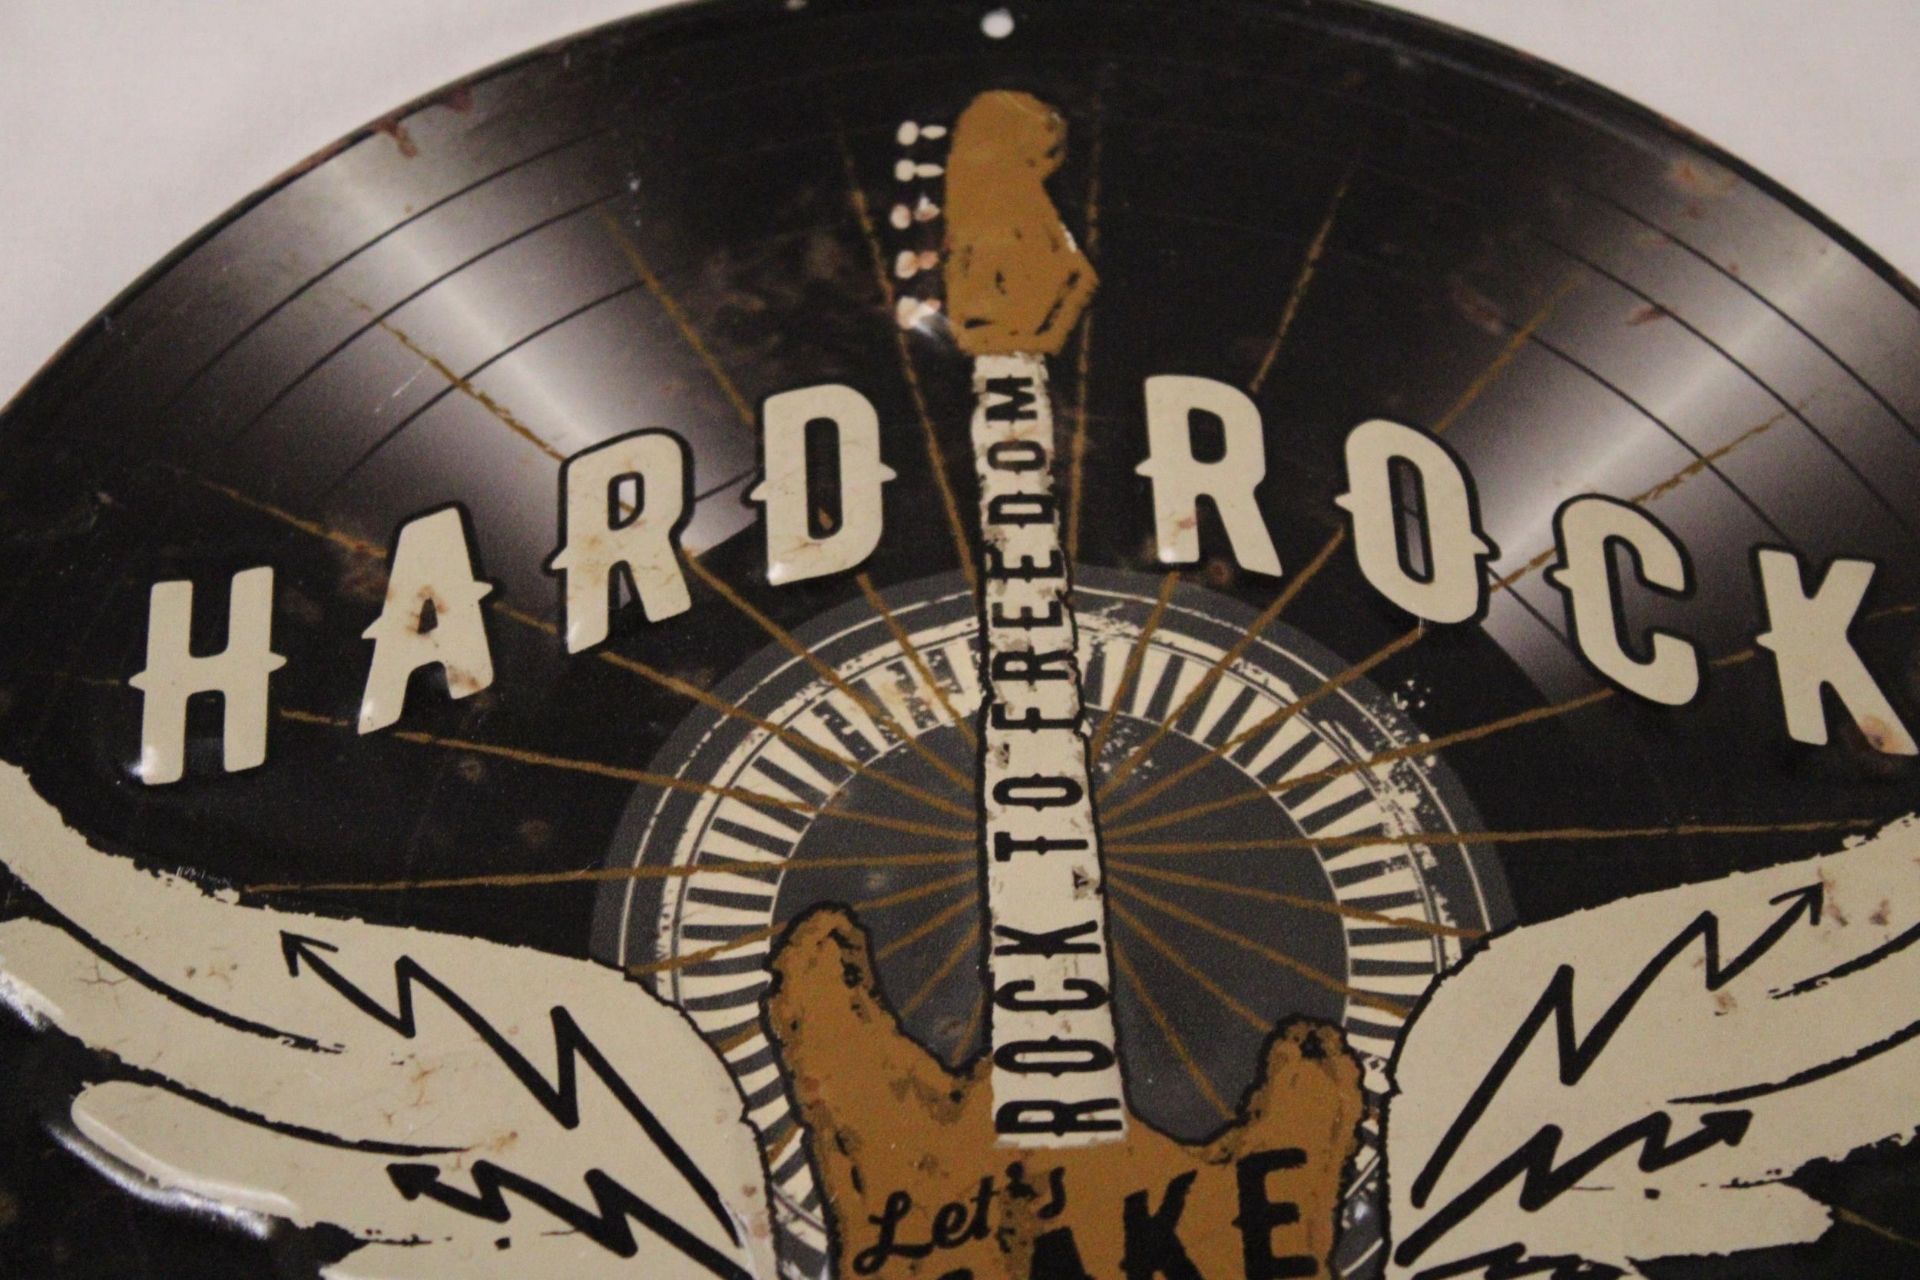 A VINTAGE 'HARD ROCK' METAL LP ADVERT PLAQUE, DIAMETER 30CM - Image 2 of 3